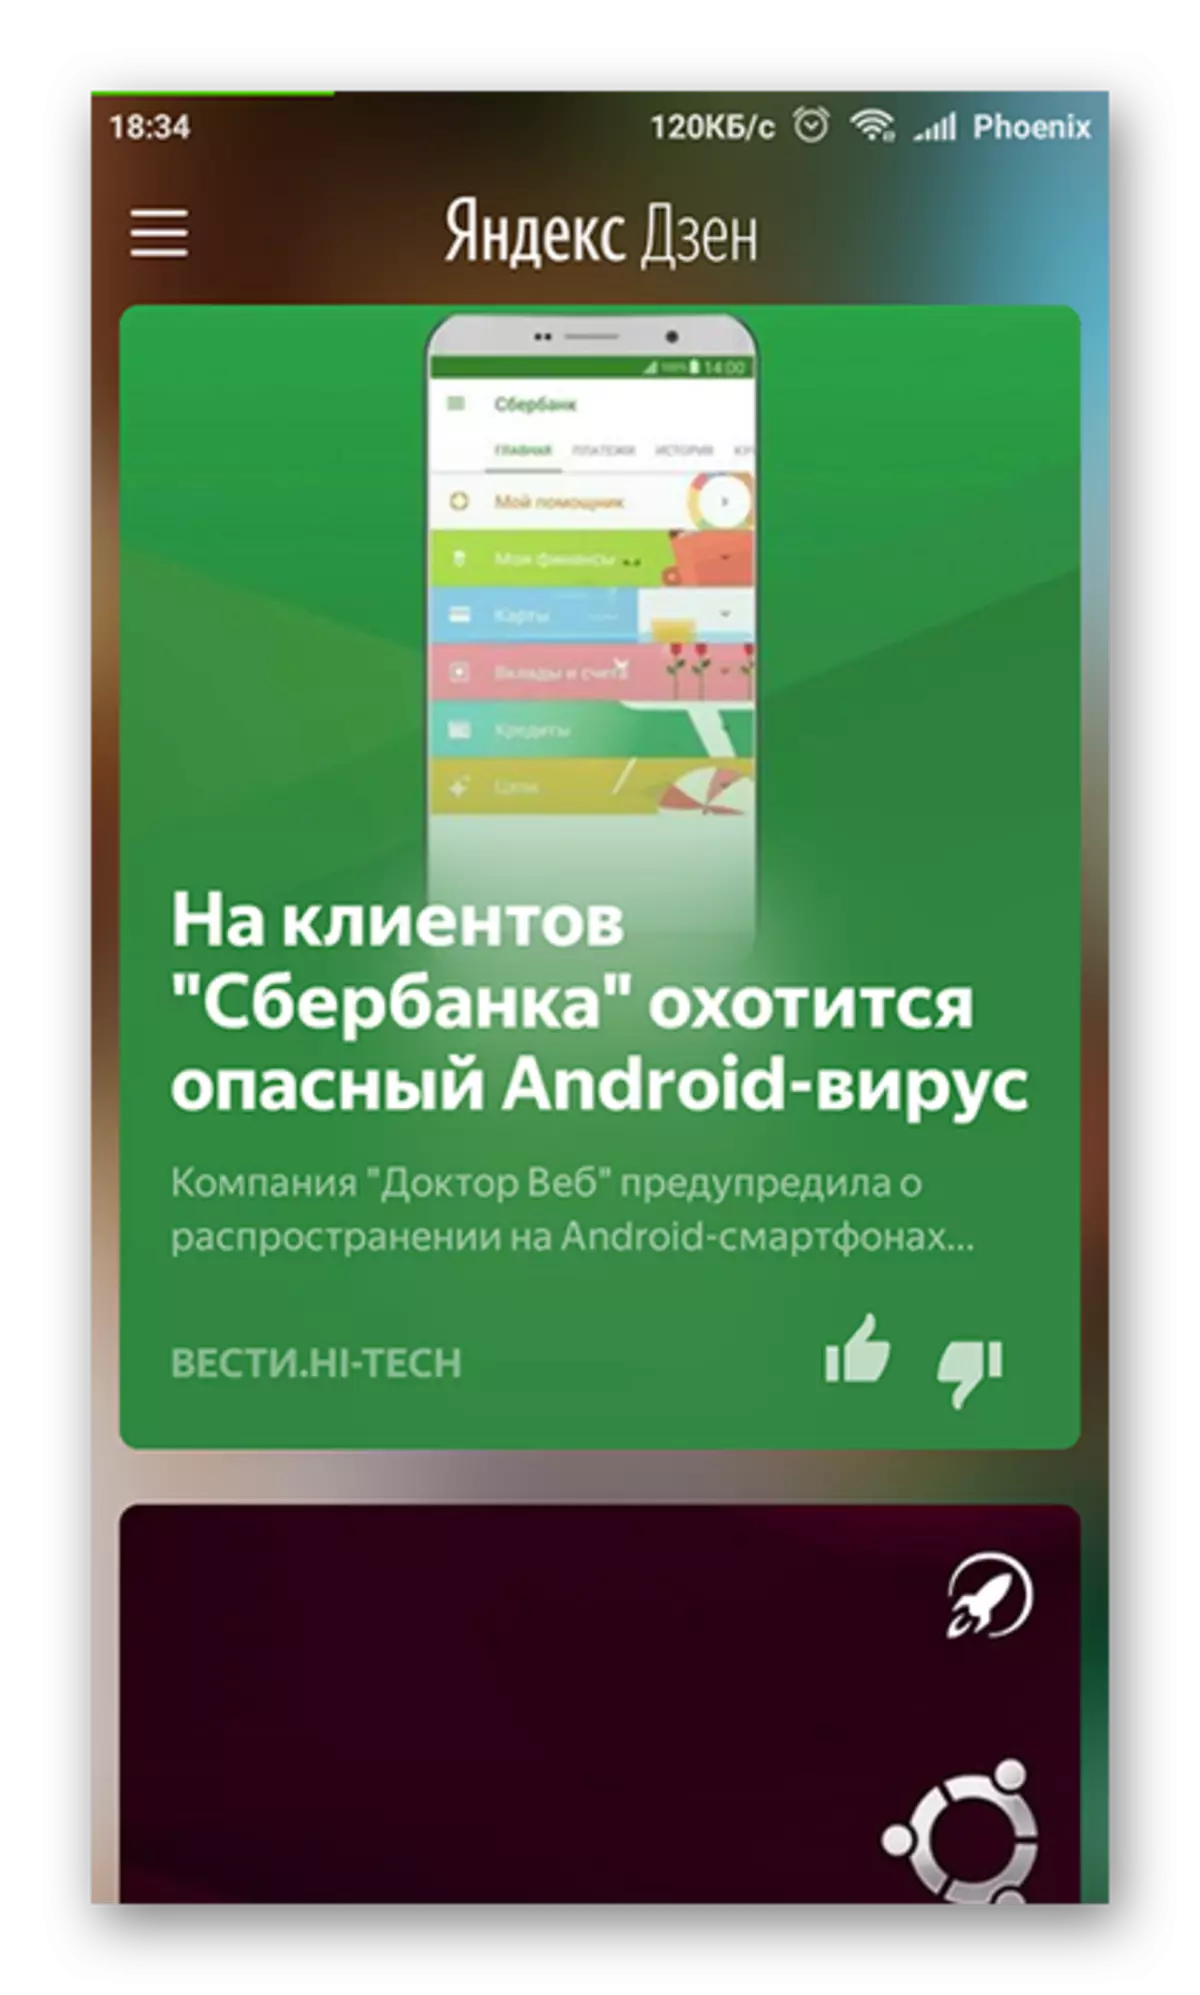 Perséinlech Empfehlungen Yandex.dzen op Android